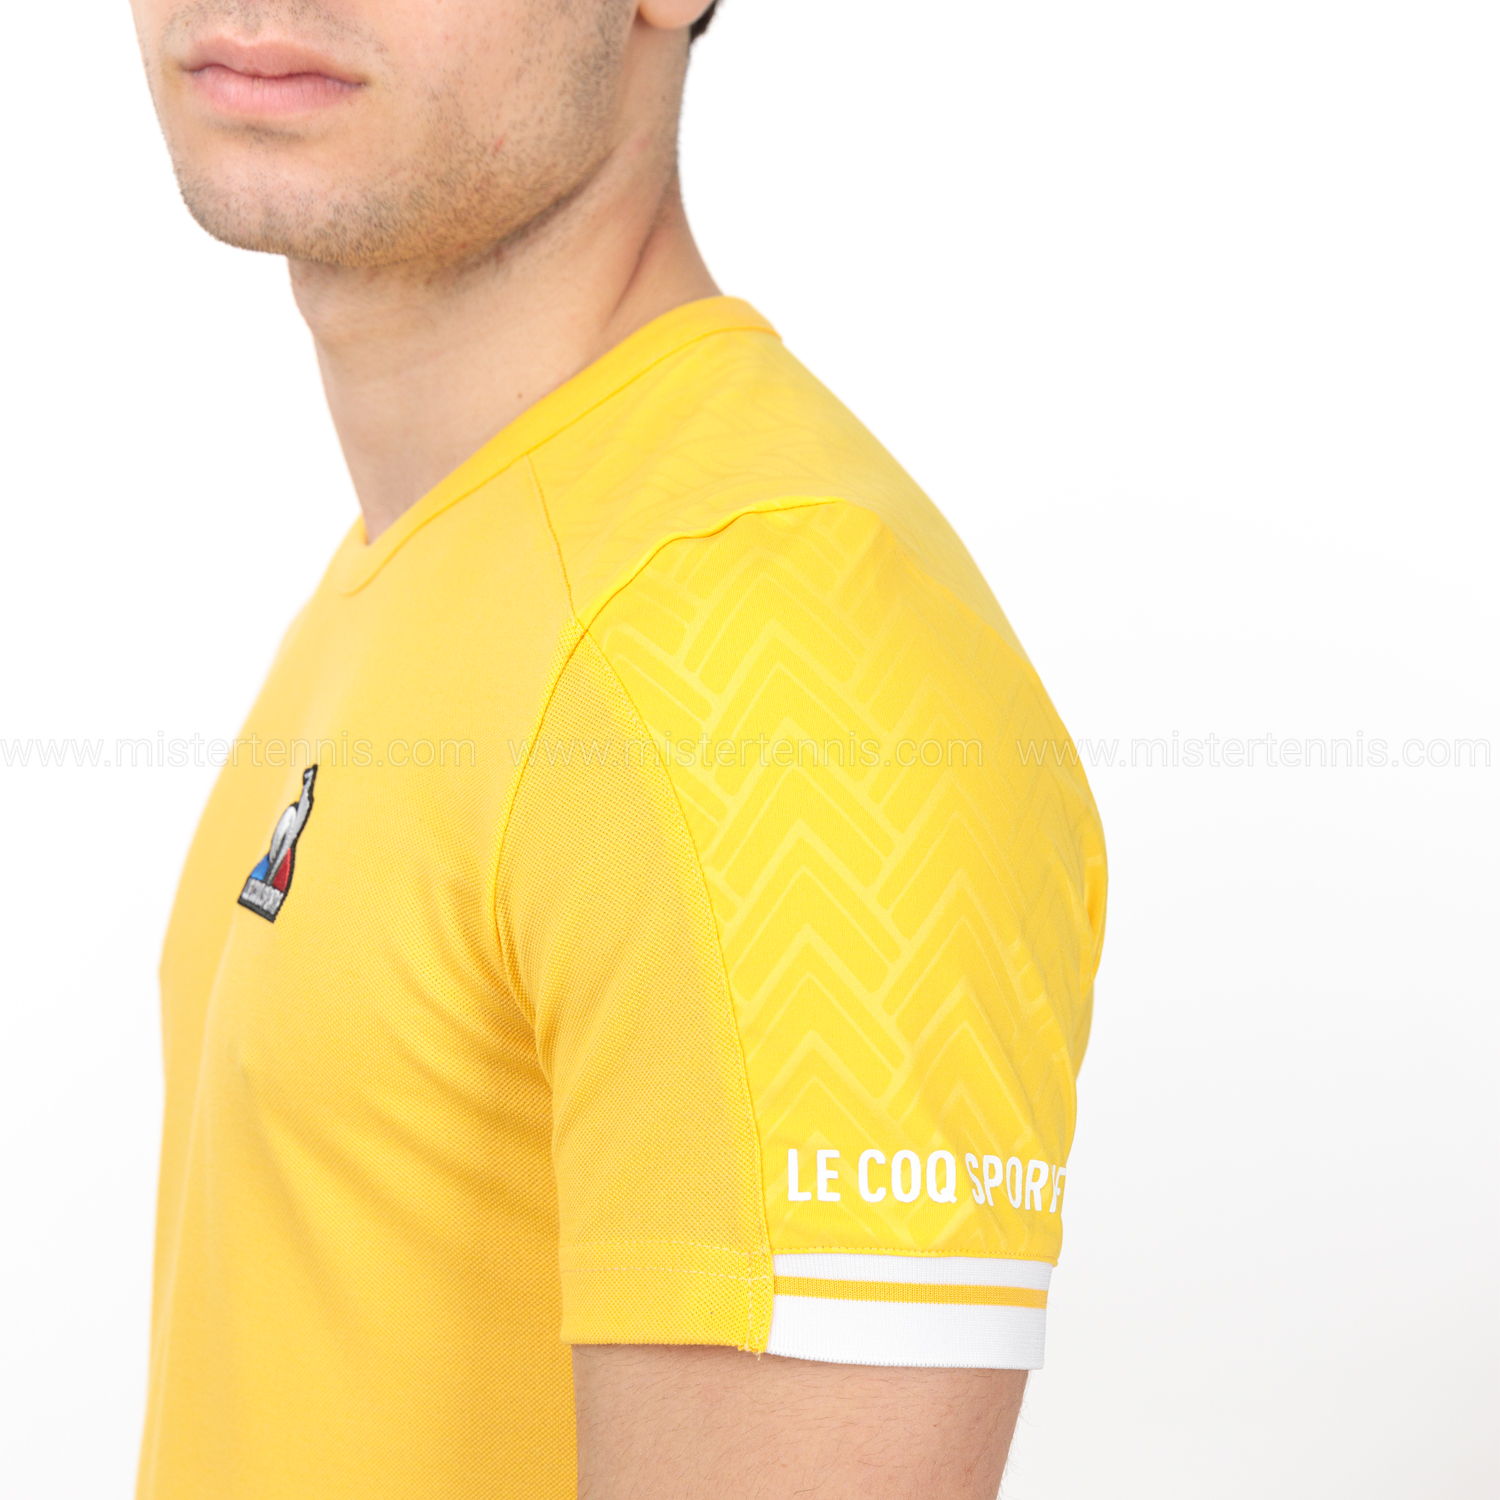 Le Coq Sportif Performance Match T-Shirt - Lemon Chrome